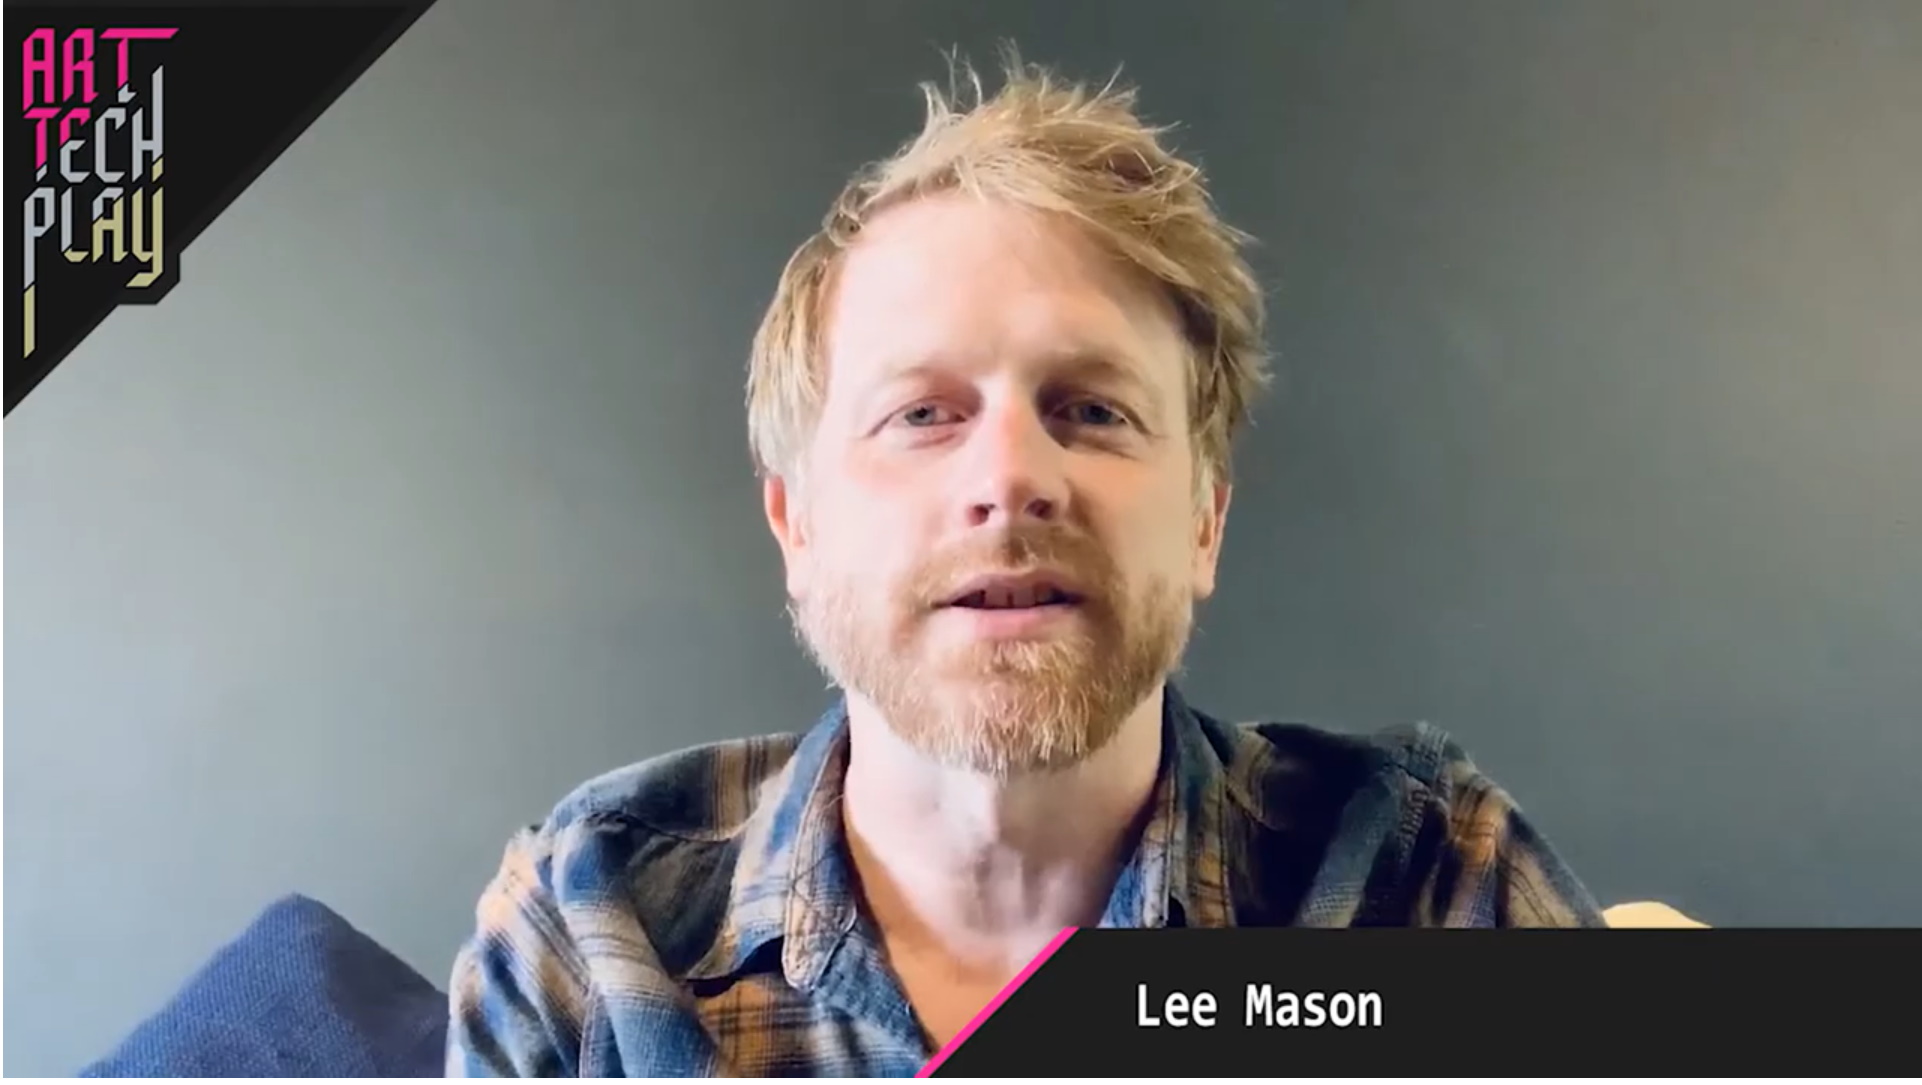 Lee Mason on creating cryptoart in VR